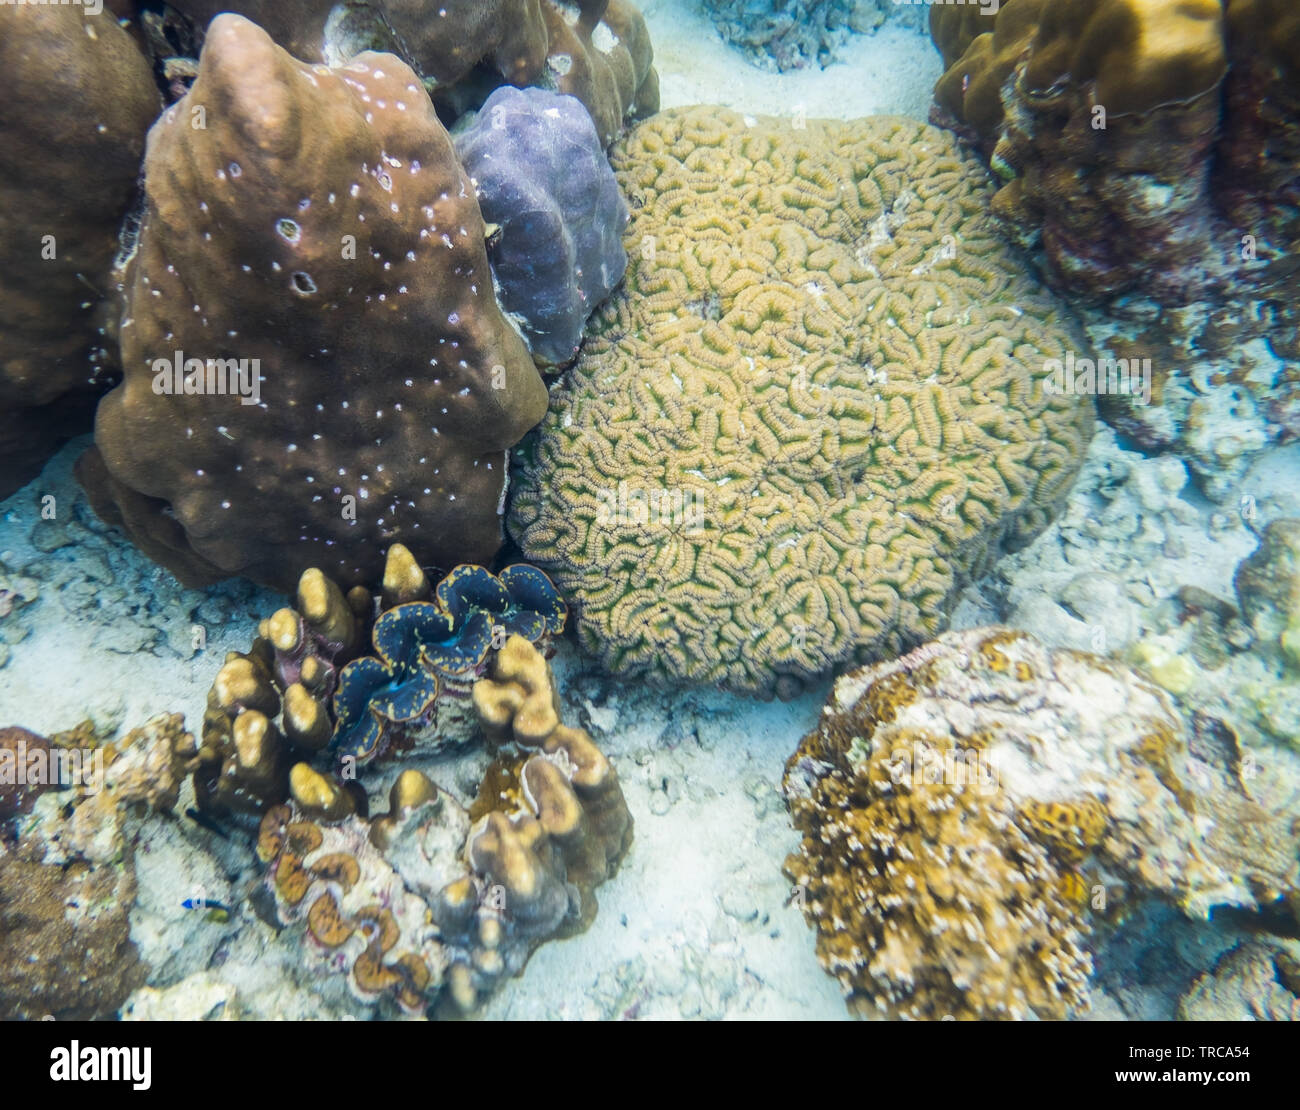 Big coral brain with big clam in lipe sea Stock Photo